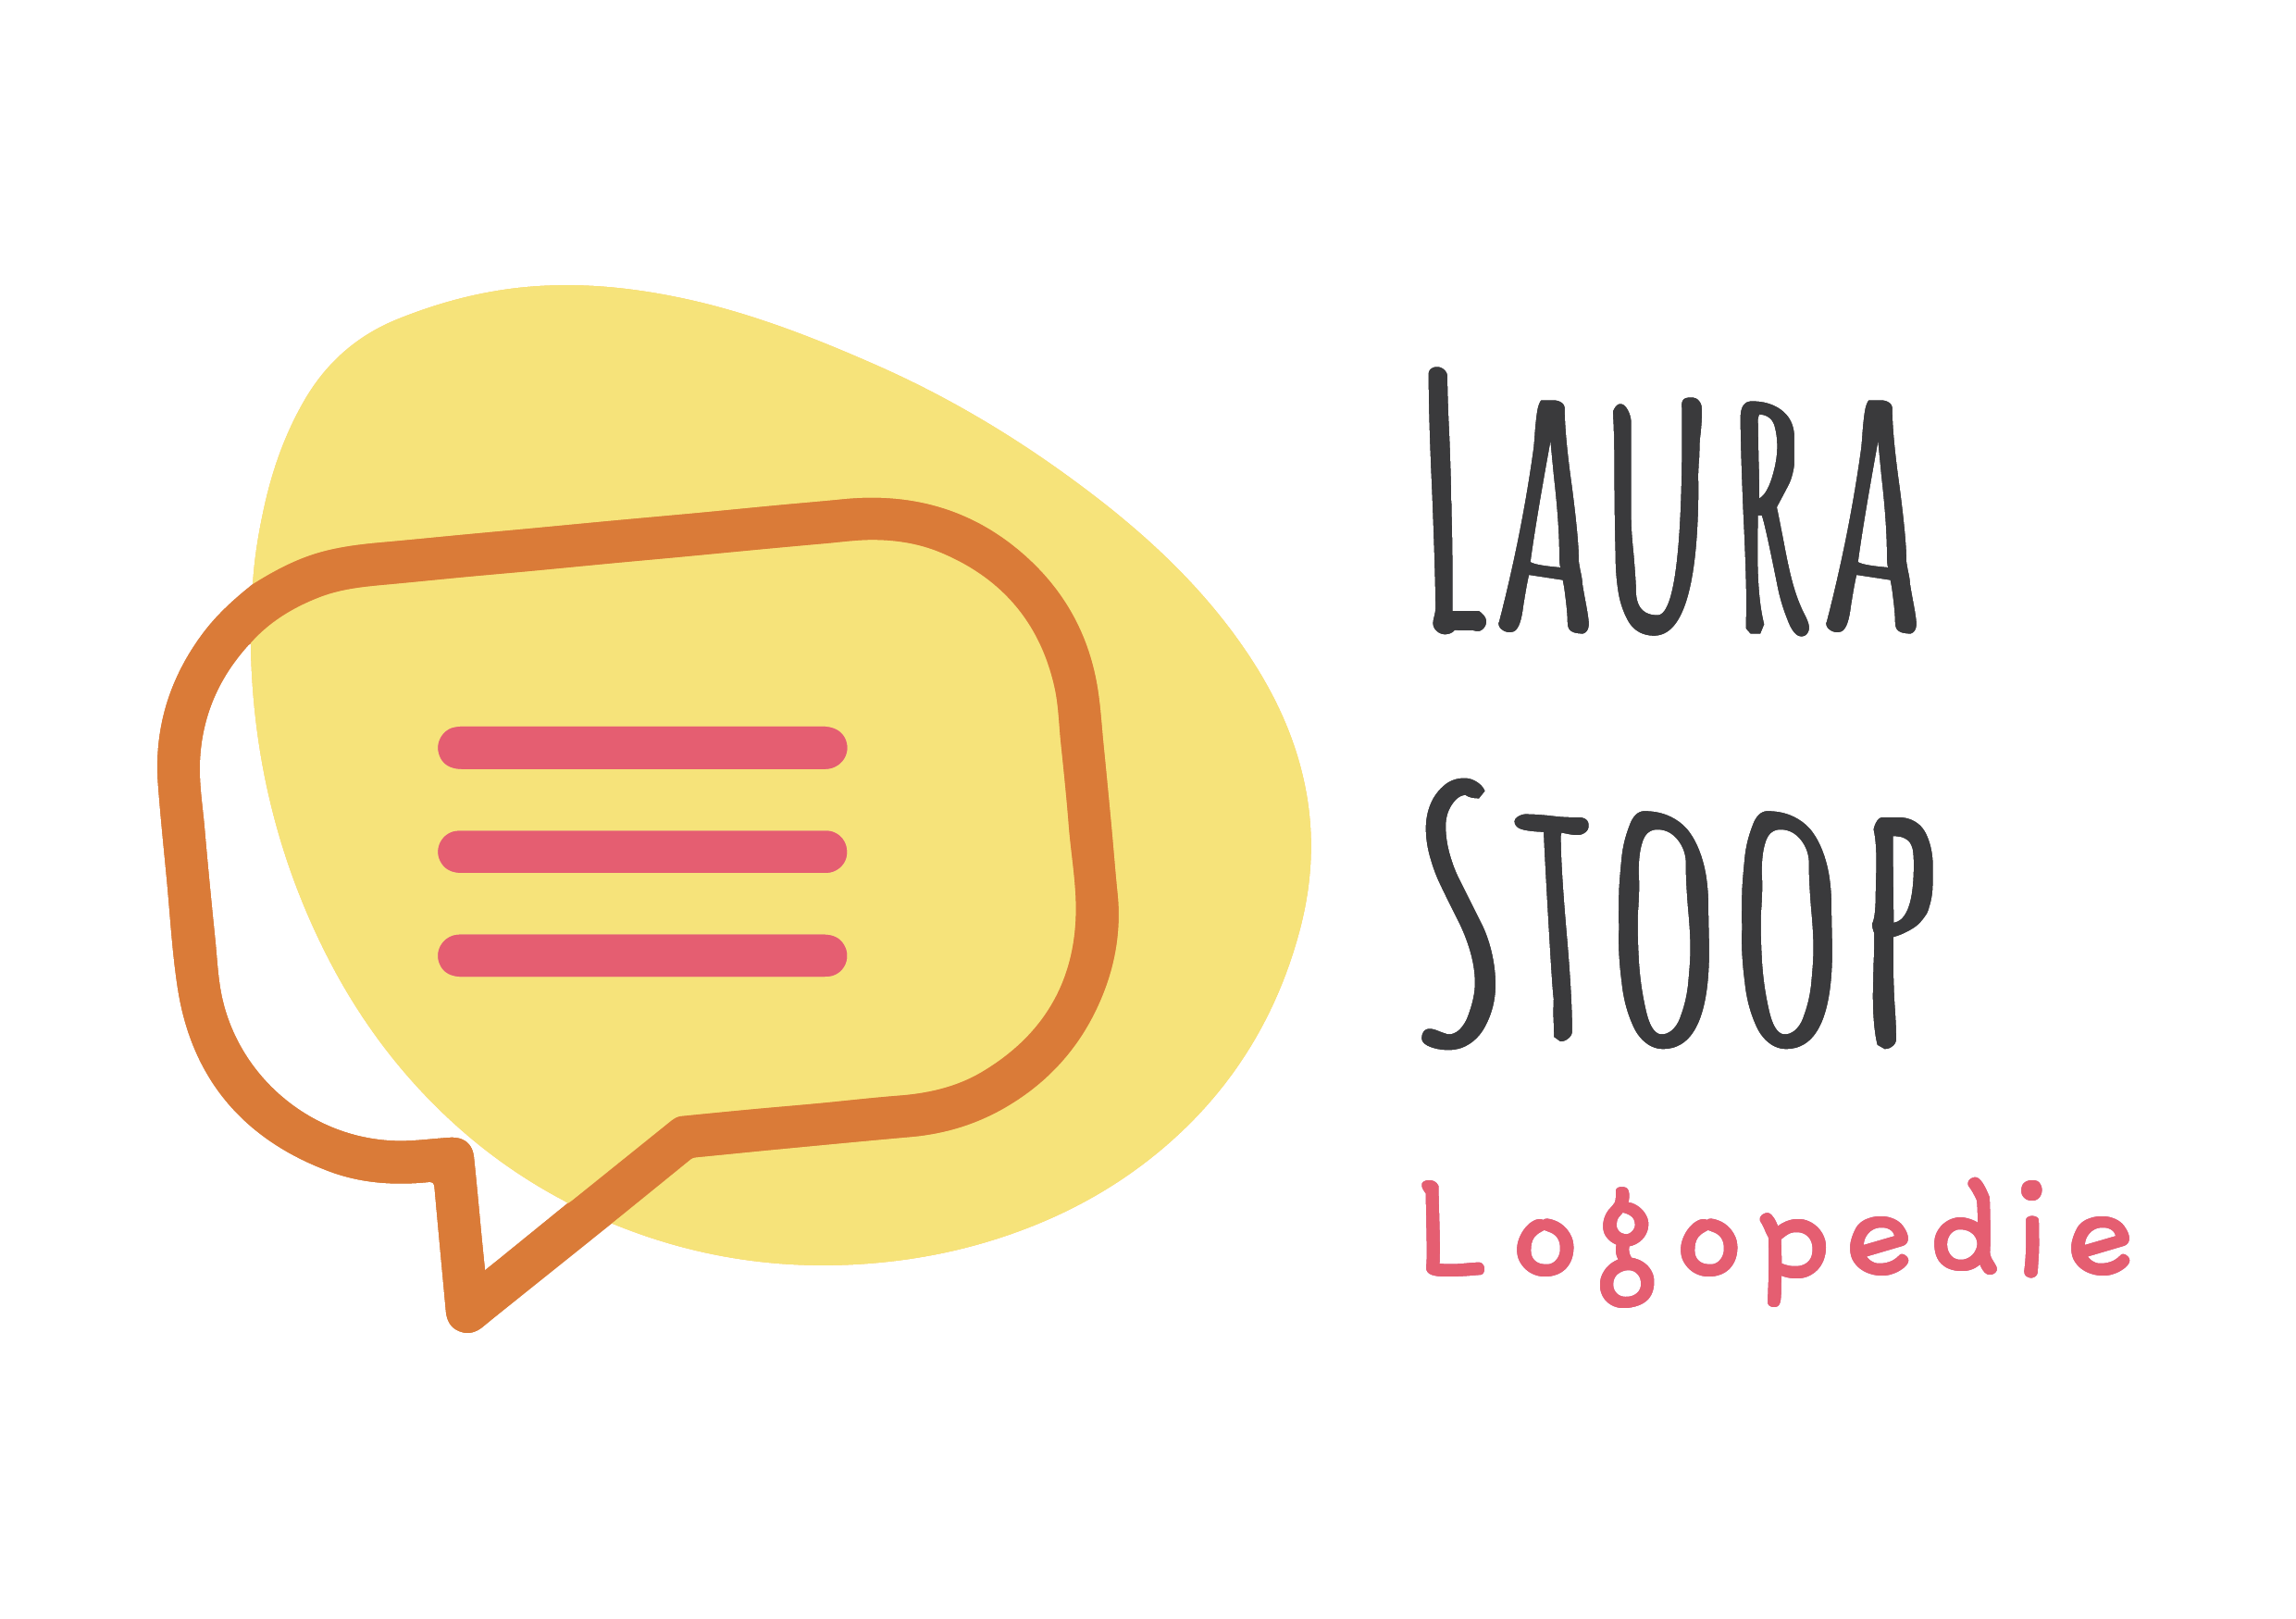 Laura Stoop